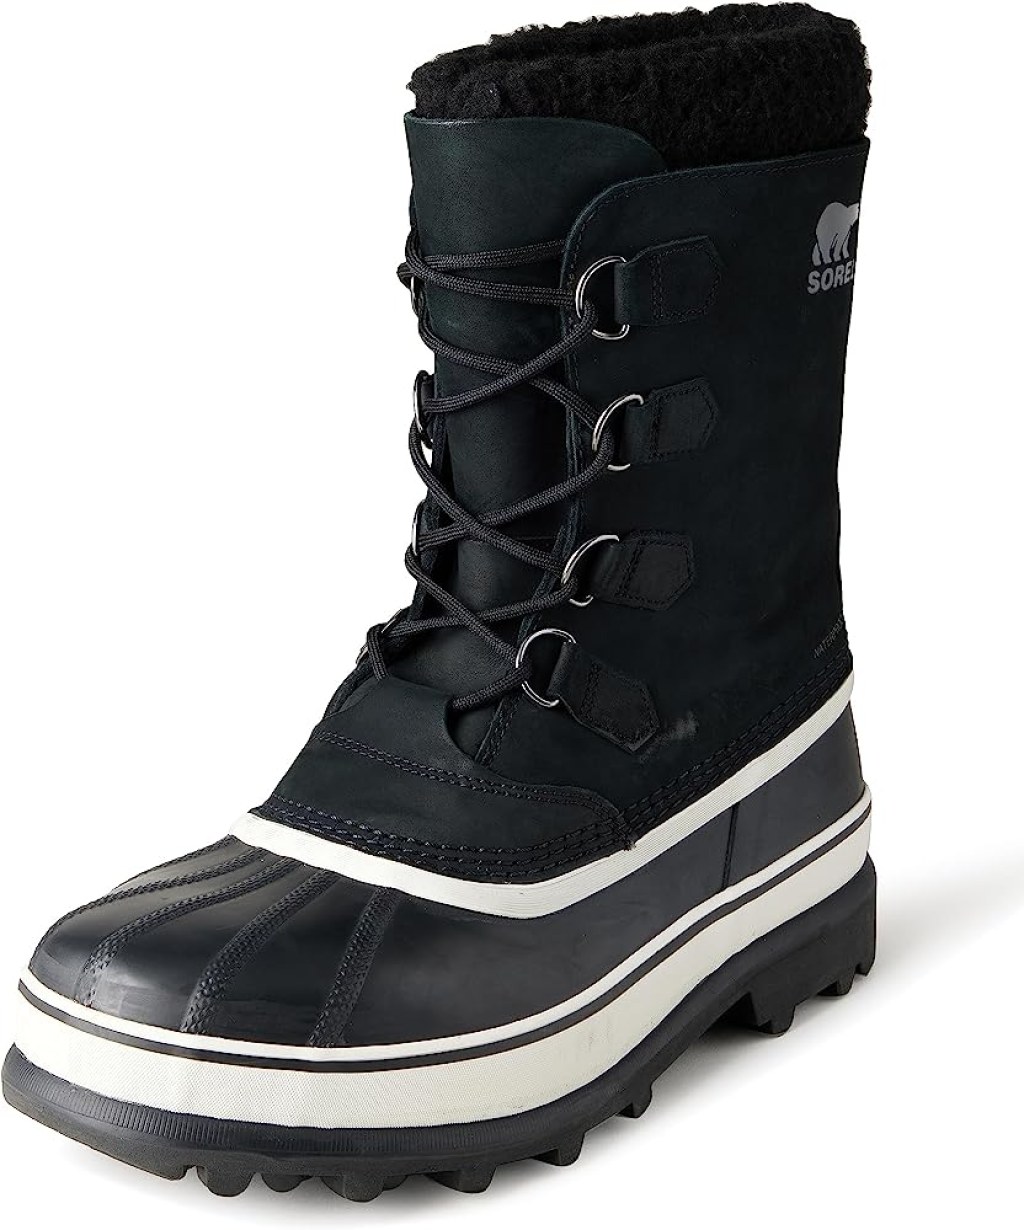 Picture of: Sorel Caribou Boots Men’s Brown Shoe Size US : Amazon